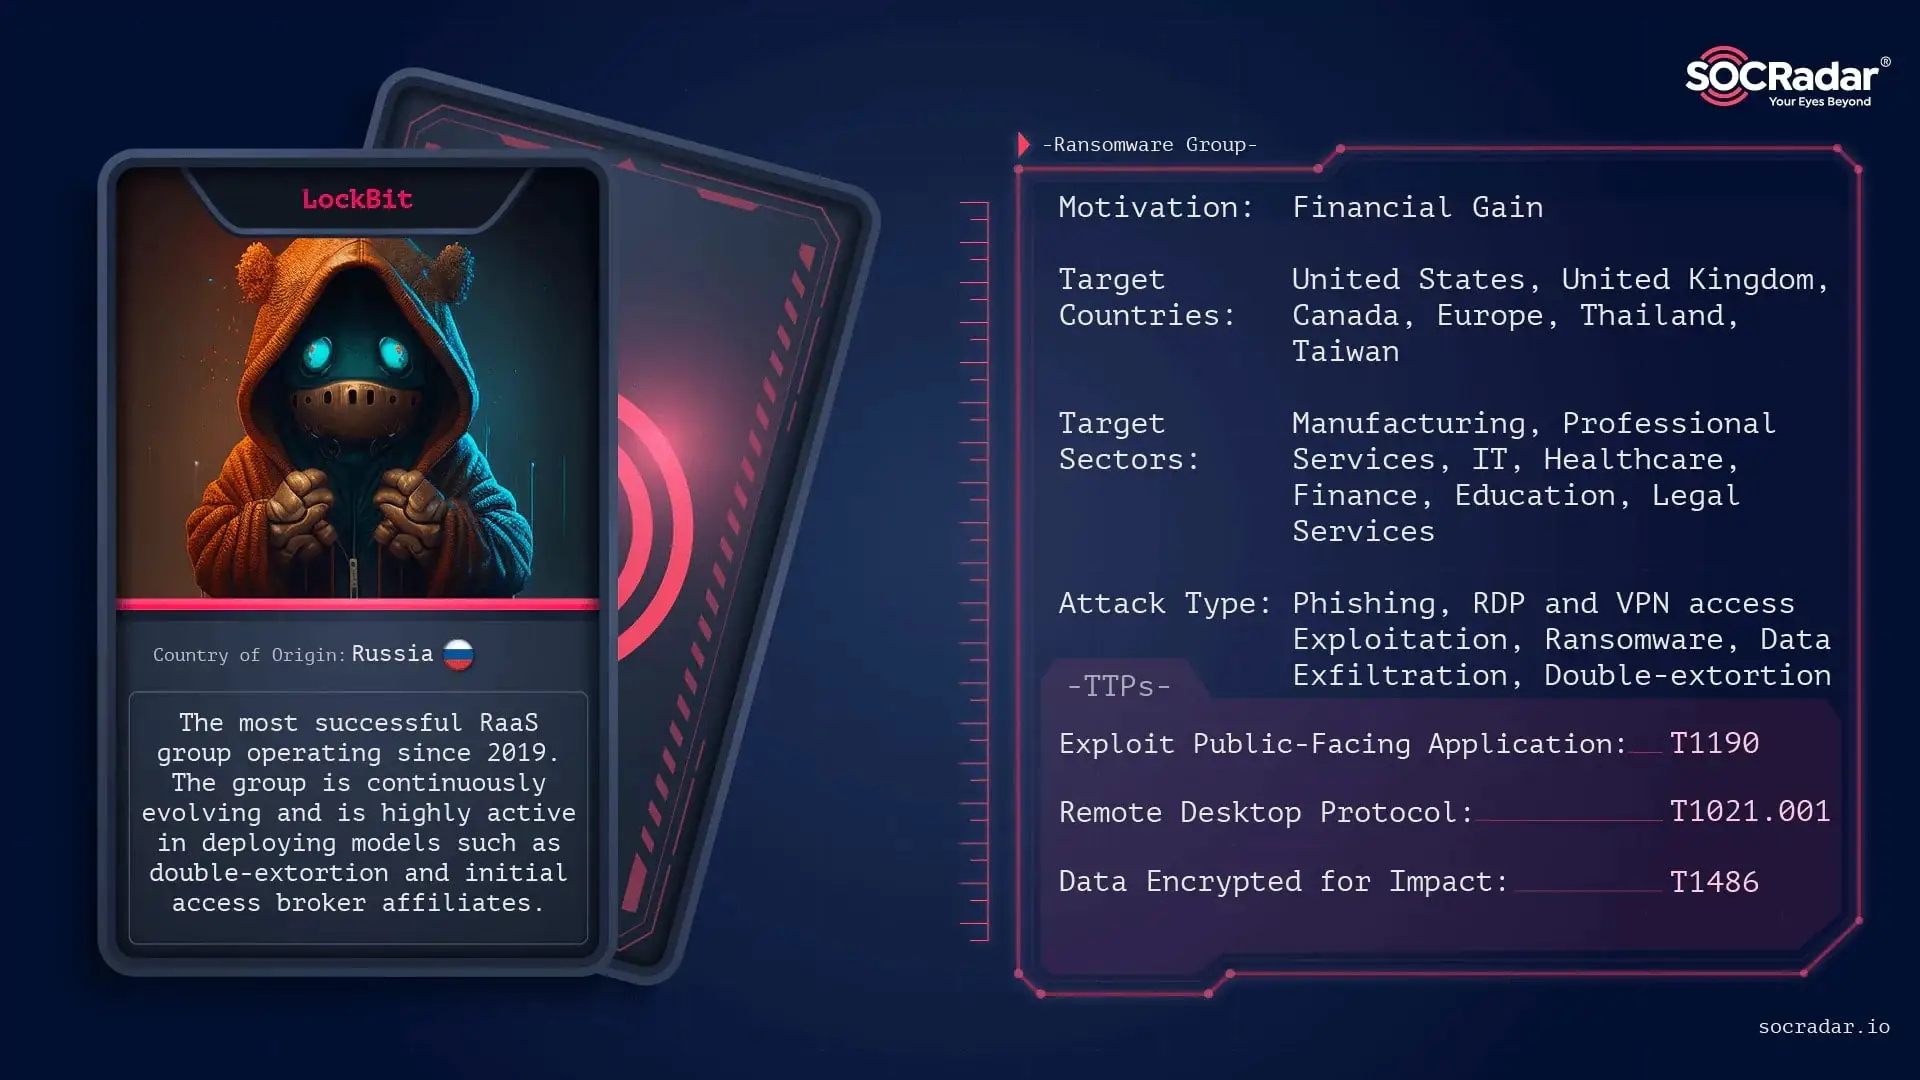 SOCRadar threat actor card of LockBit Ransomware